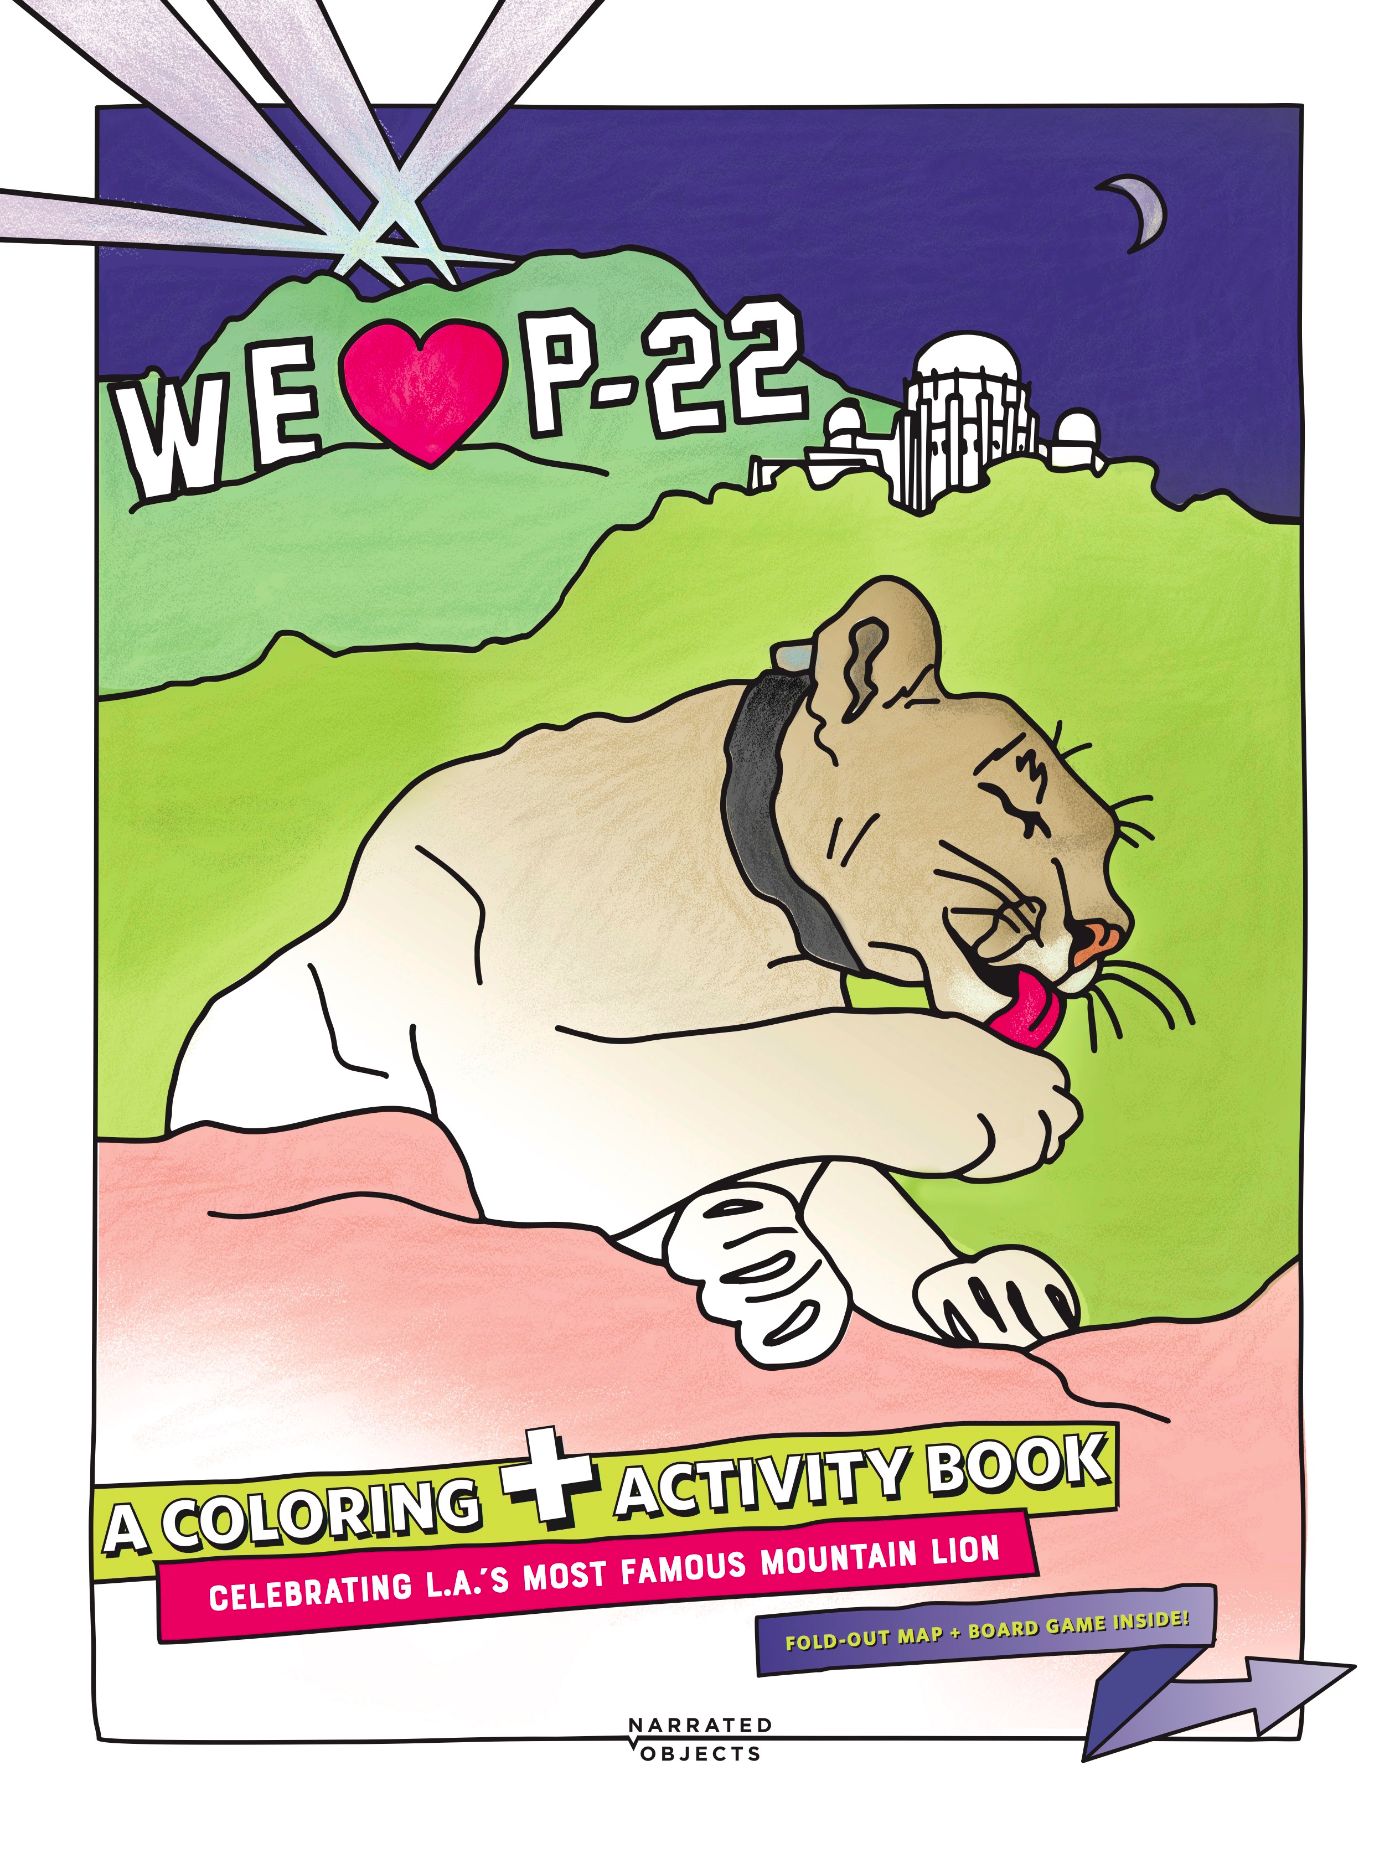 We Heart P-22: A Coloring + Activity Book Celebrating L.A.'s Most Famous Mountain Lion